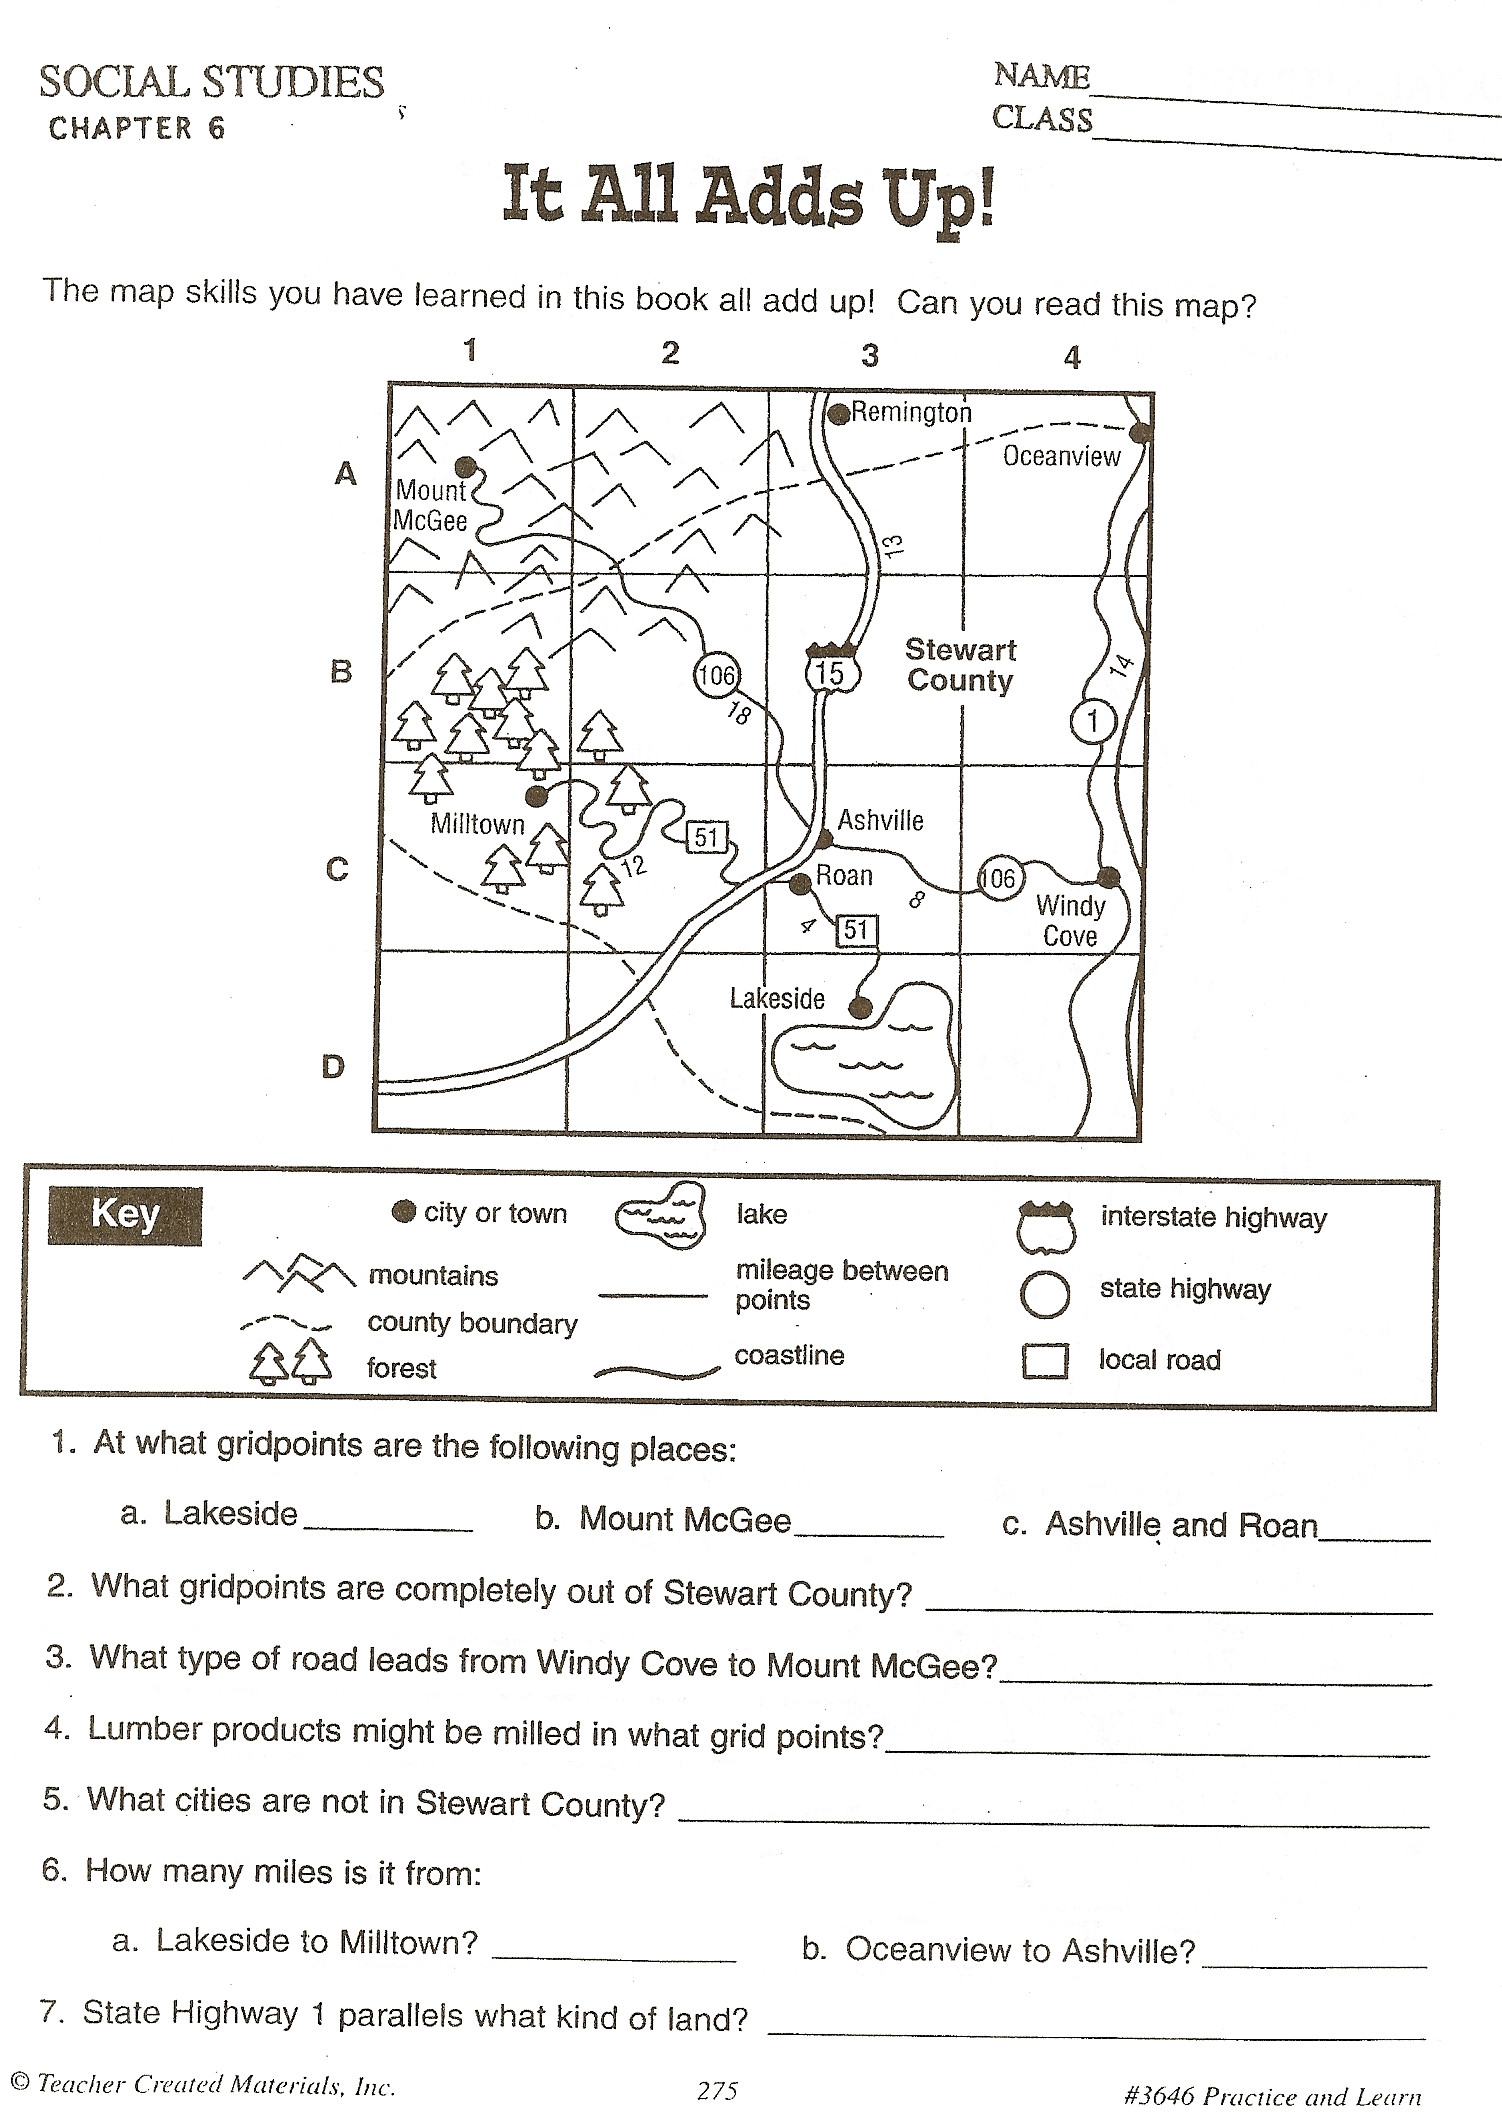 Printable Map Skills Worksheets For 4th Grade Luxury Printable Social Stu S Worksheets